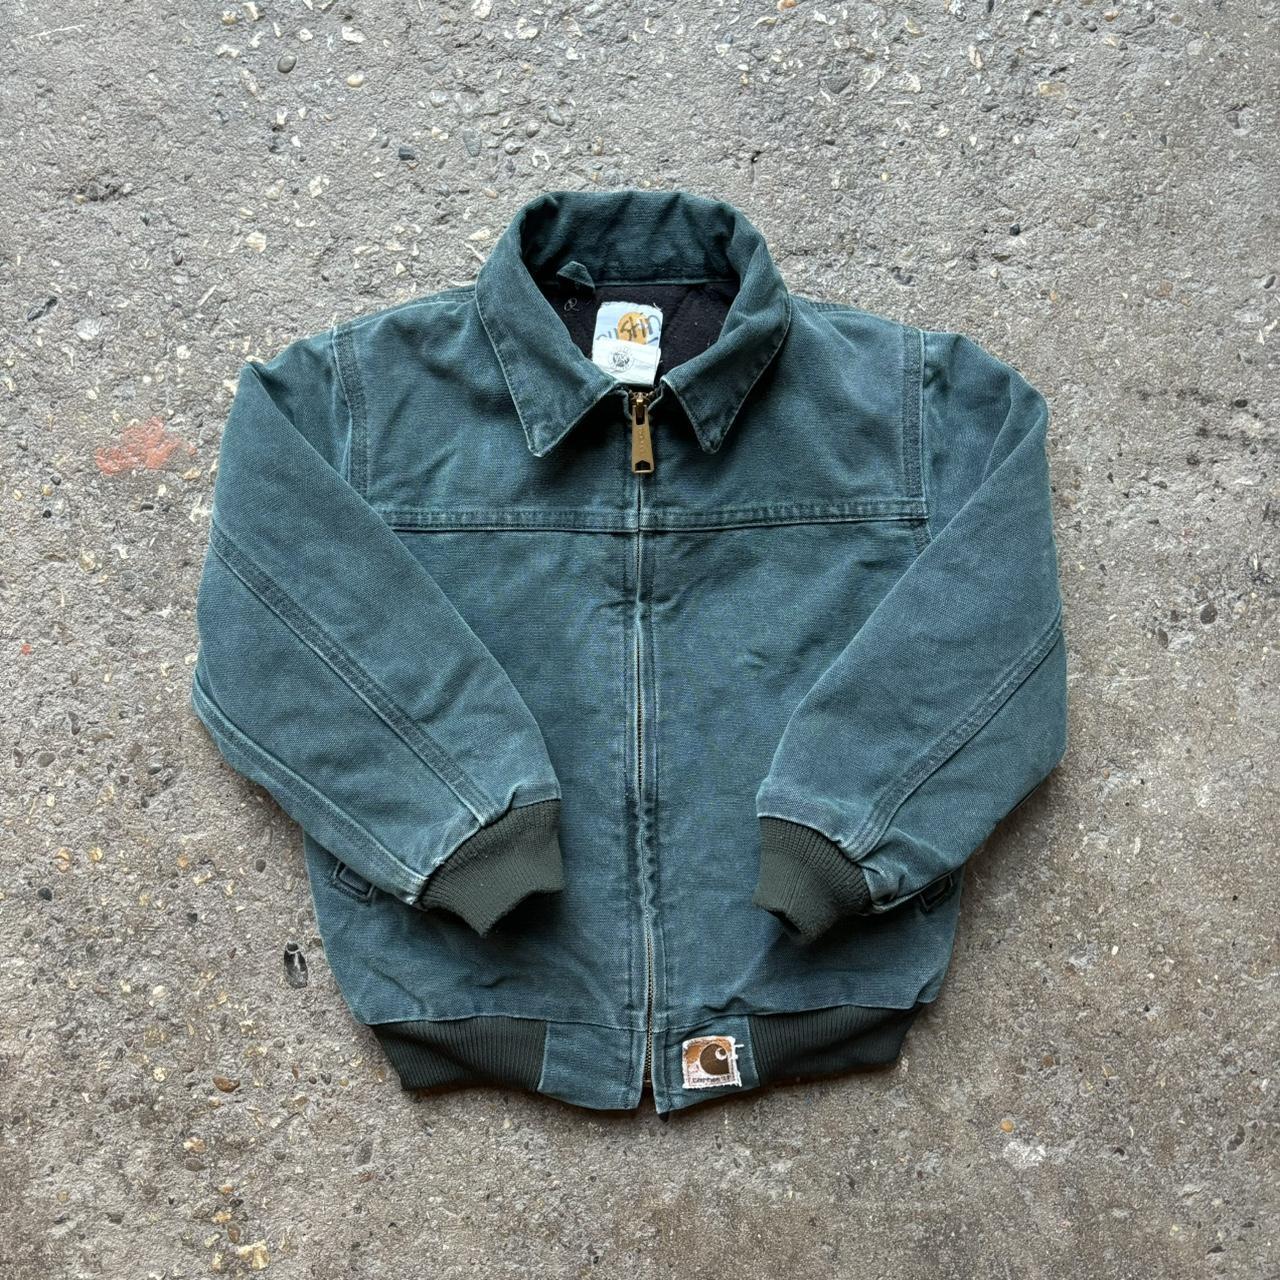 Vintage 90s Teal Carhartt Kid’s Jacket Made in USA... - Depop